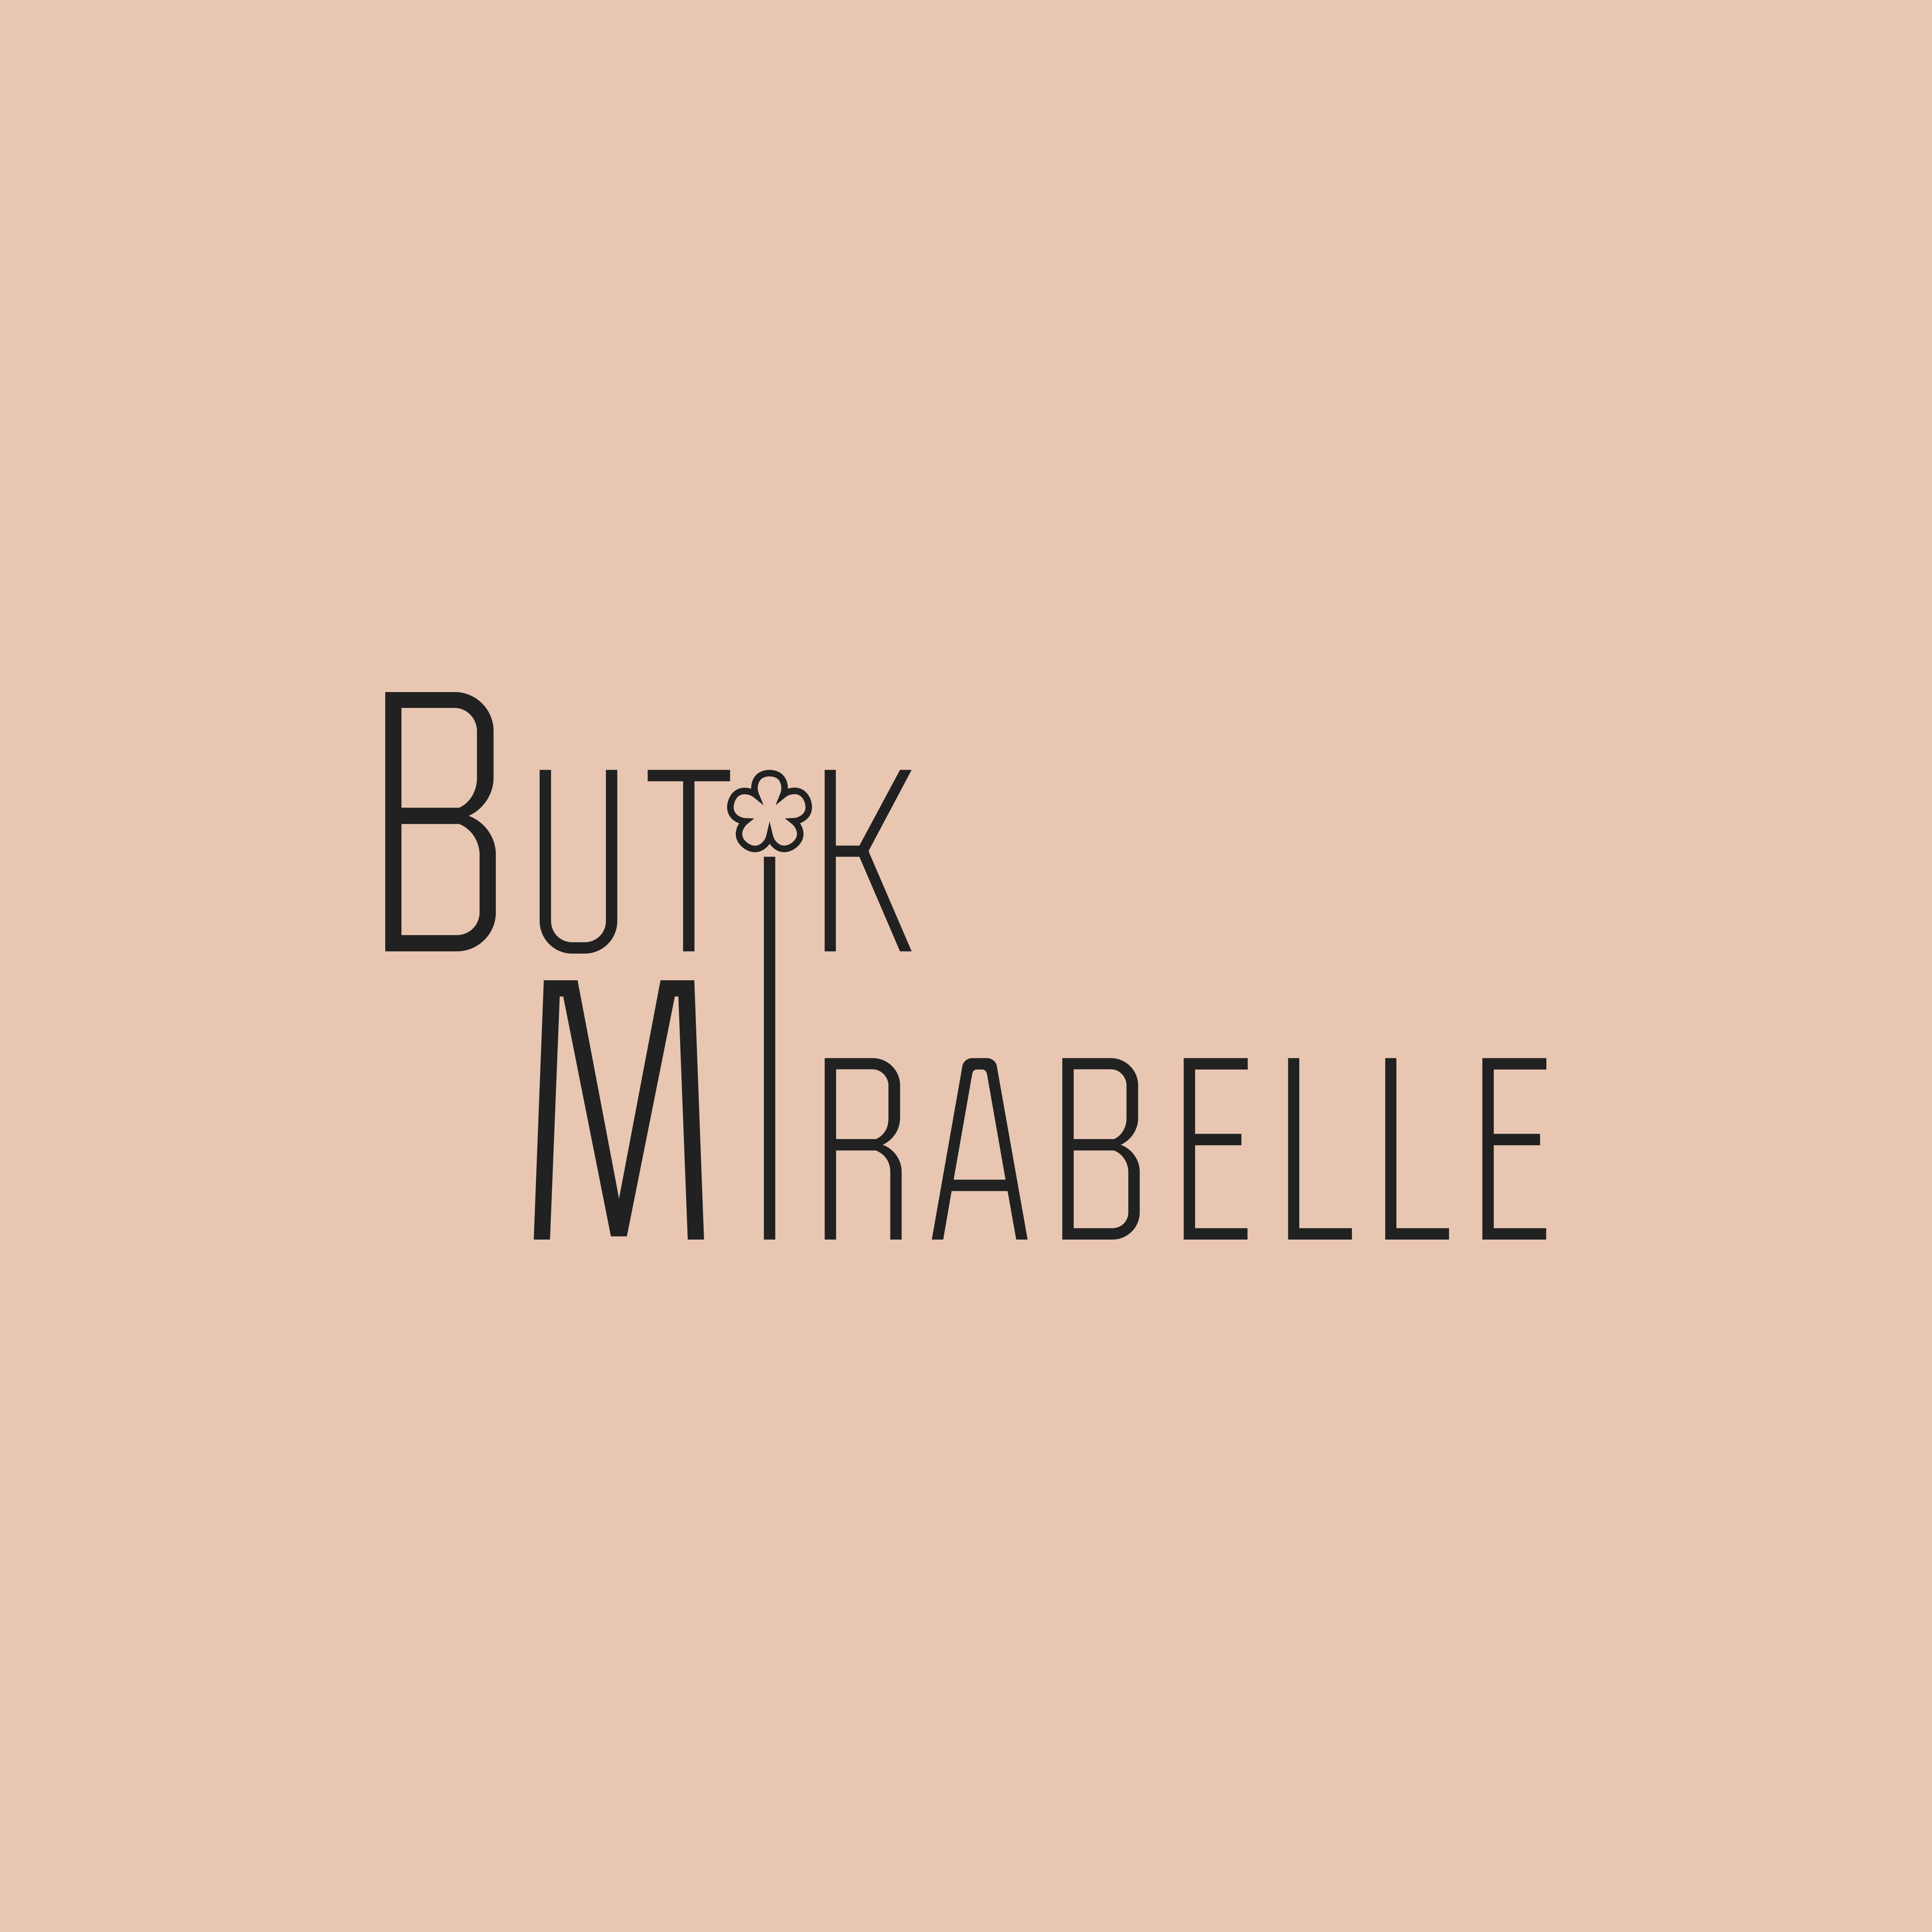 Butik Mirabelle